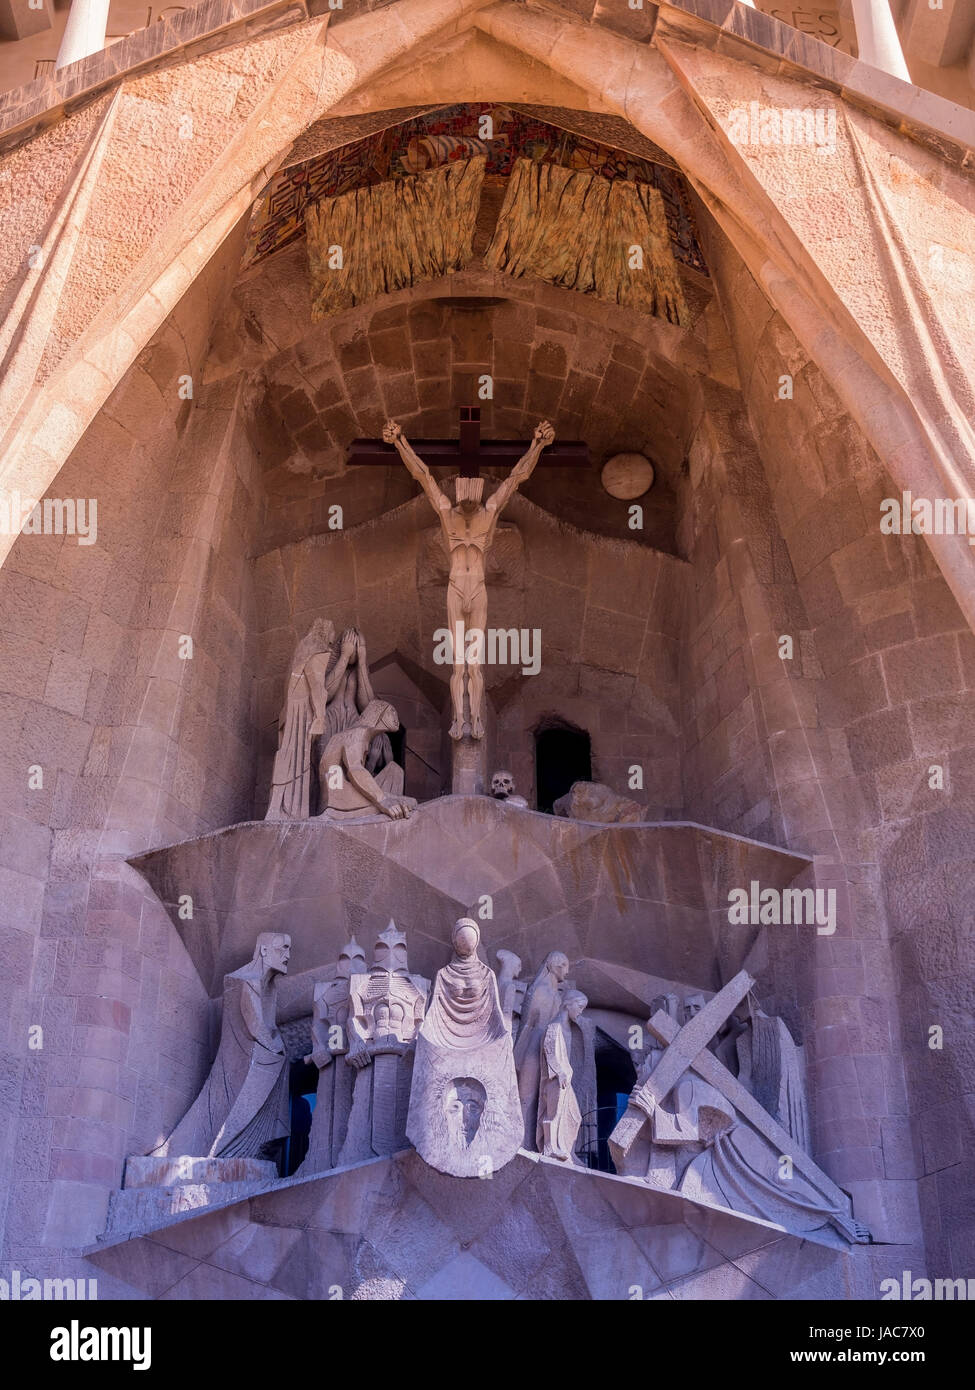 Field recording of the Sagrada Familia in Barcelona, Spain, Aussenaufnahme der Sagrada Familia in Barcelona, Spanien Stock Photo